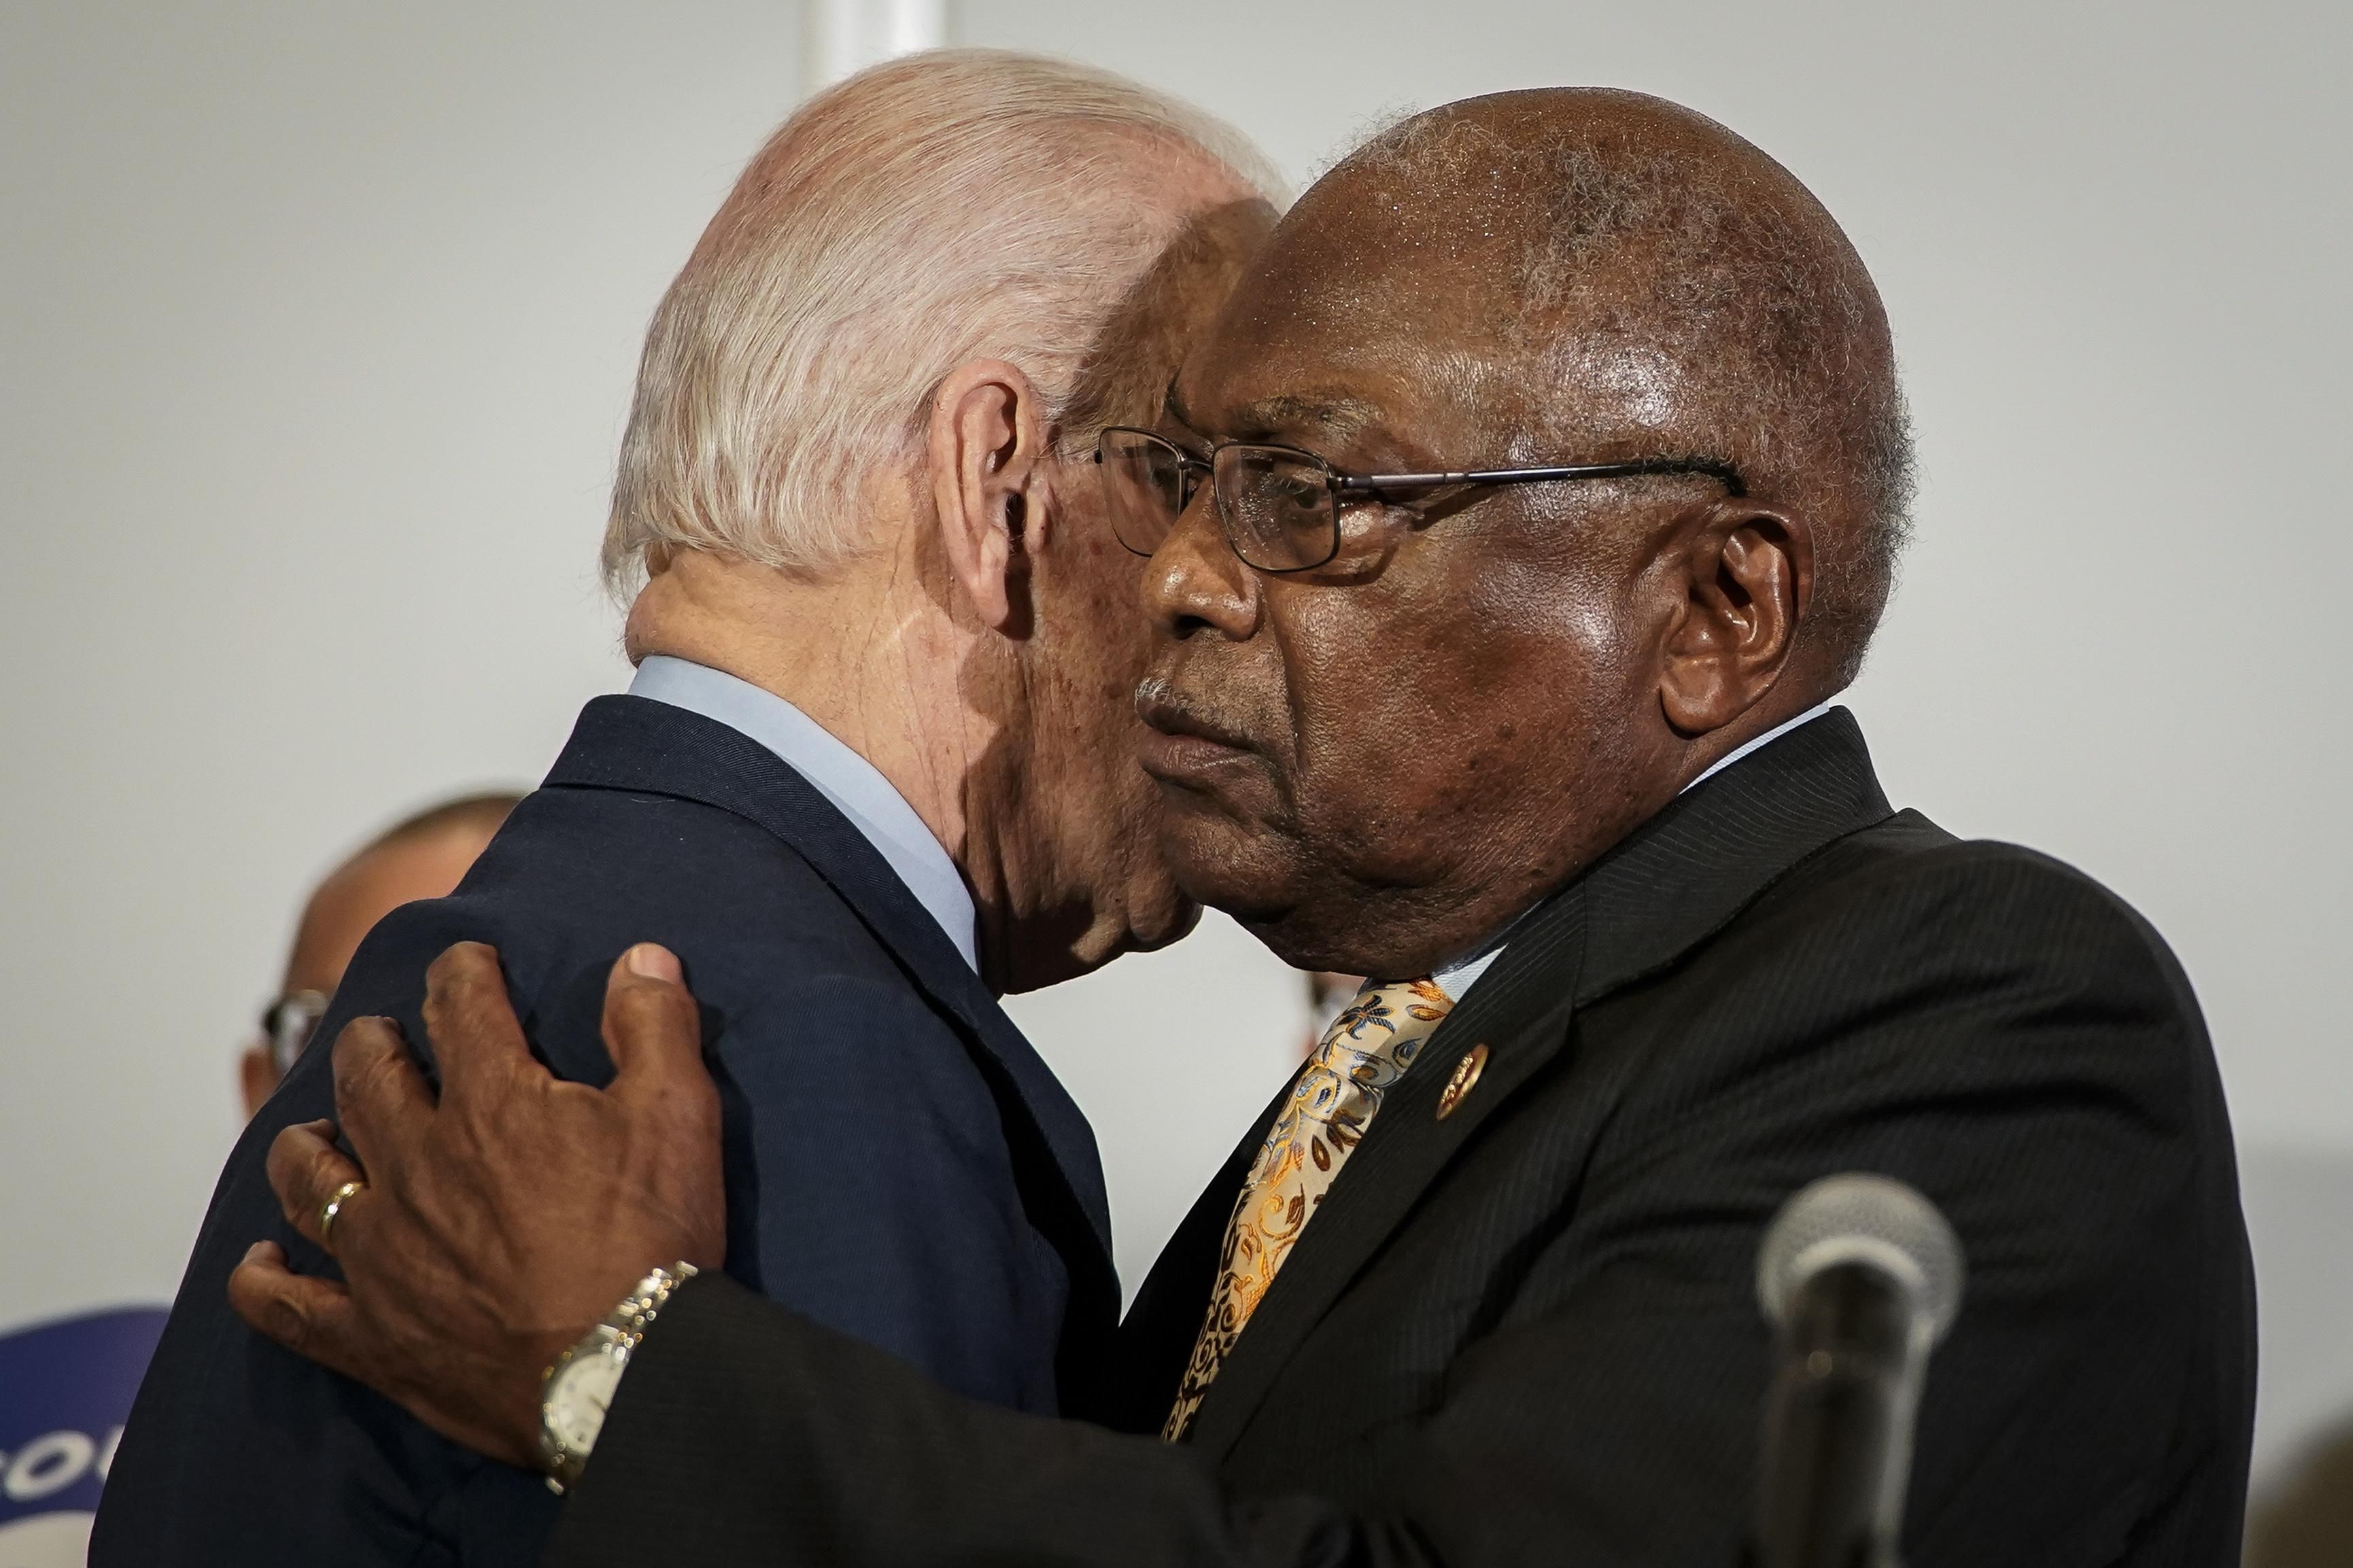 Biden and Clyburn embrace